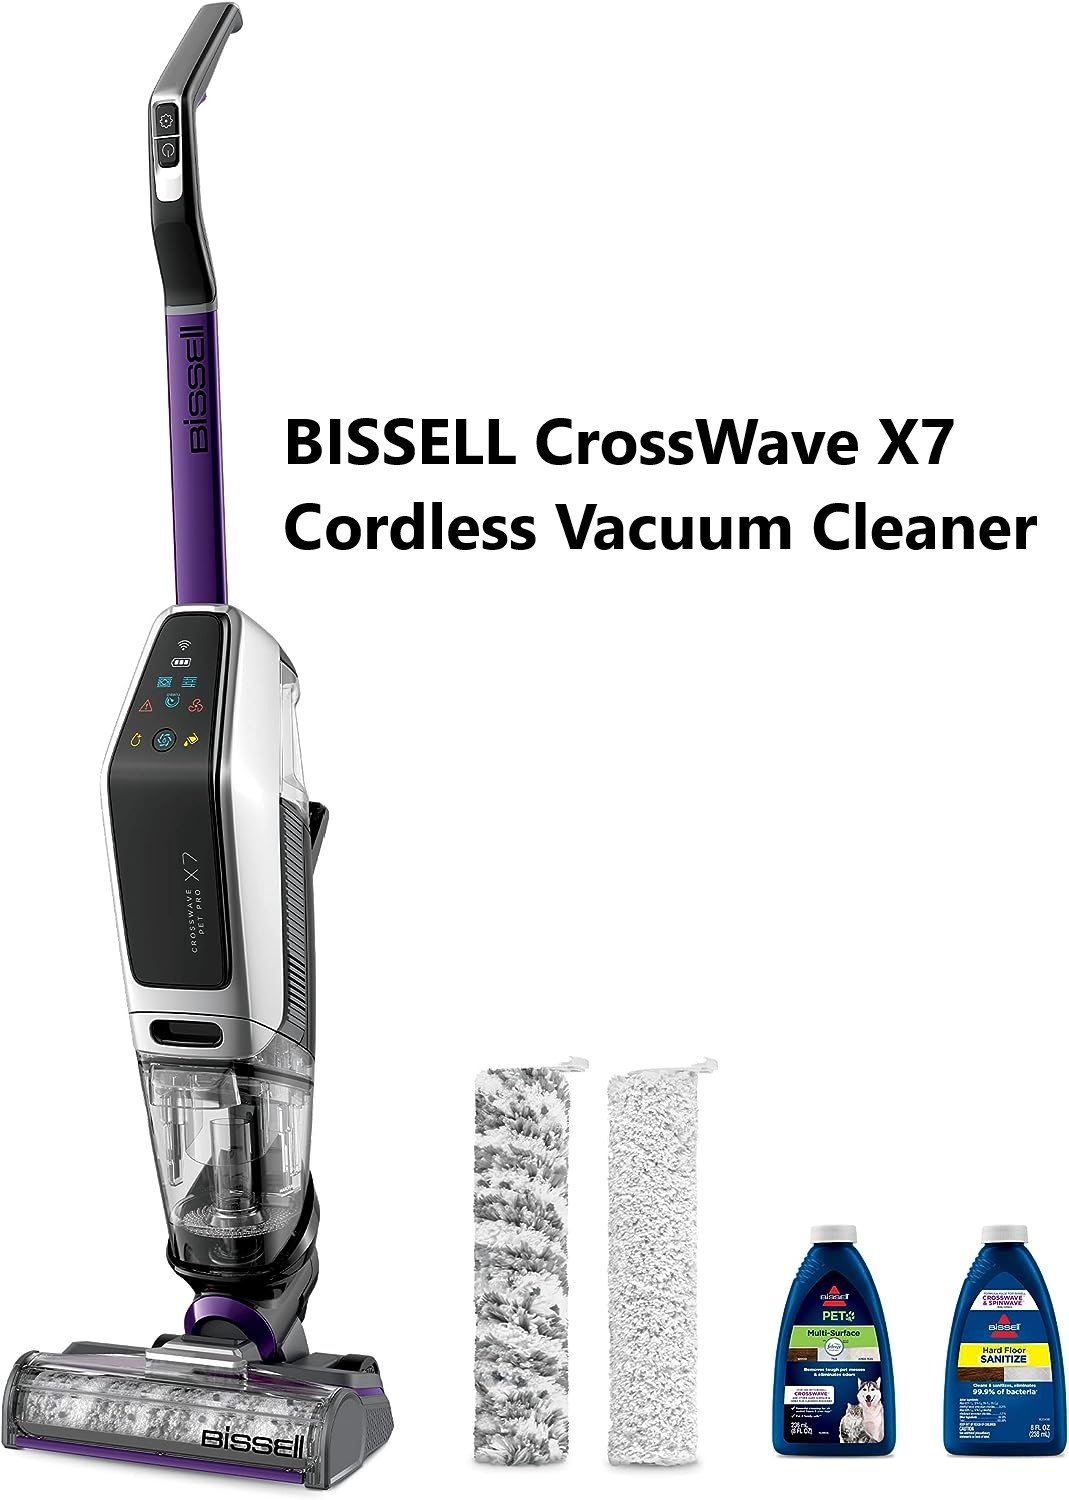 BISSELL CrossWave X7 Cordless Vacuum Cleaner